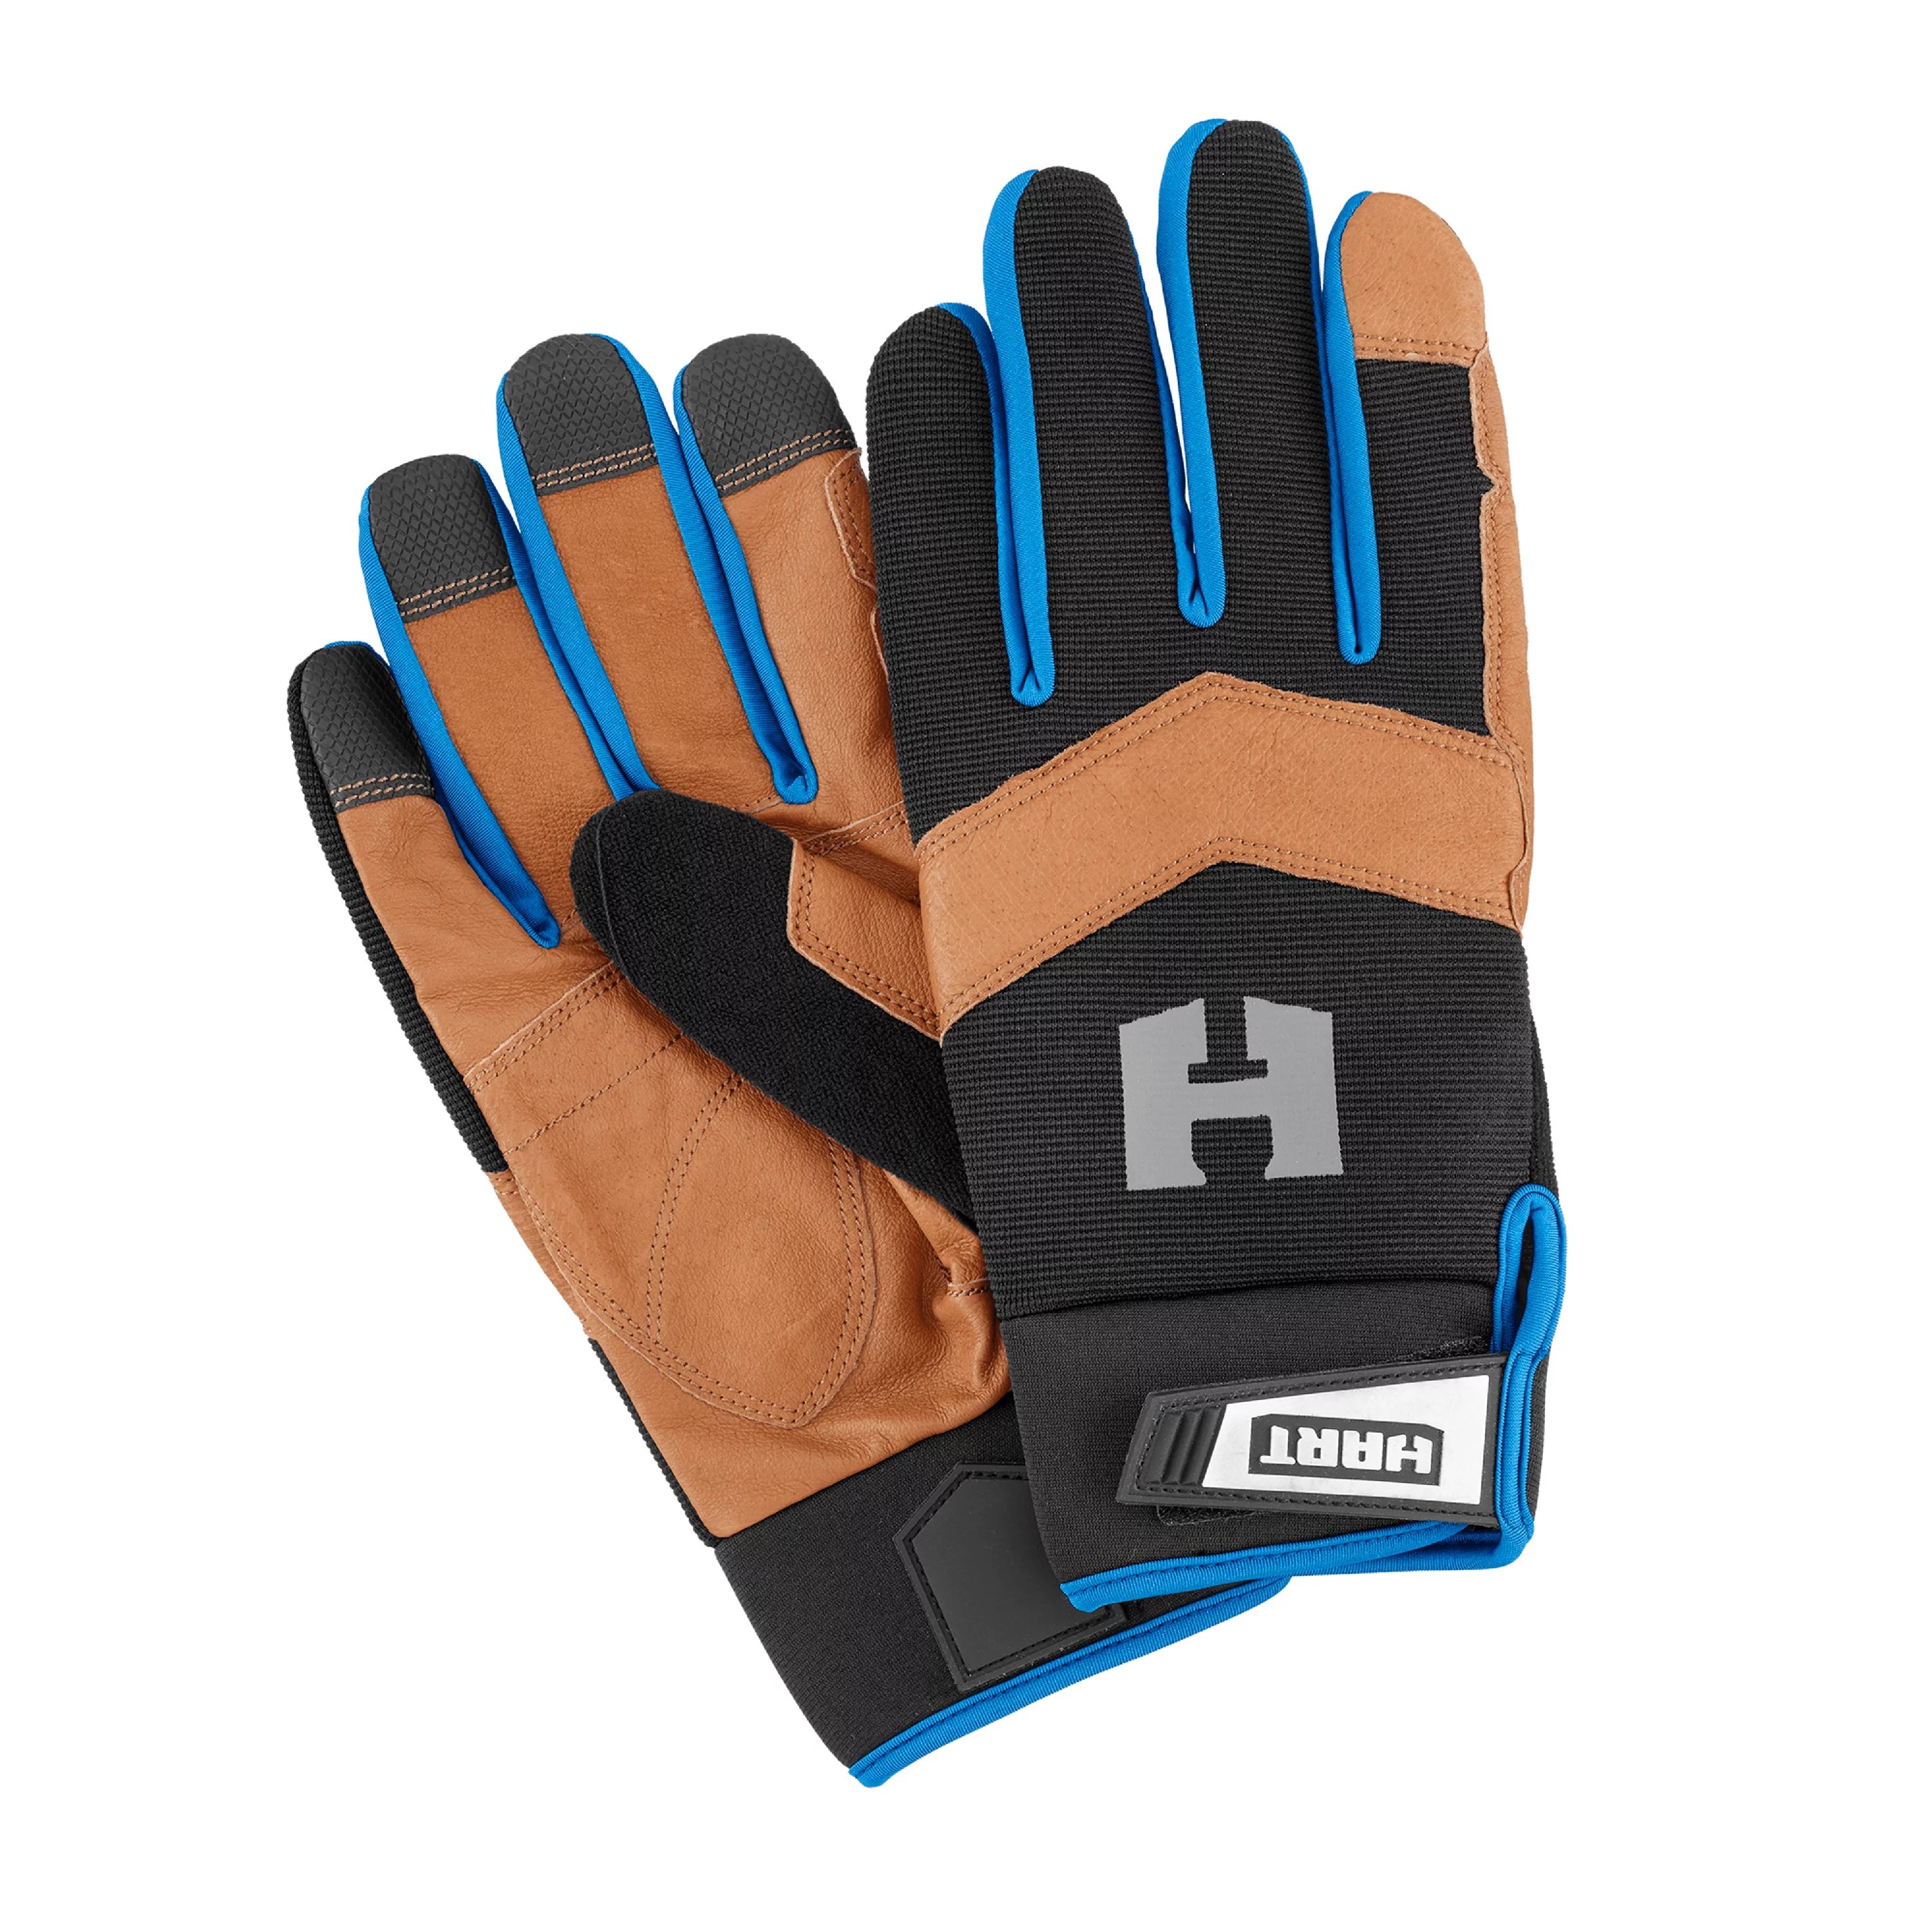 HART Leather Palm Work Gloves, 5-Finger Touchscreen Capable, Medium | Walmart (US)